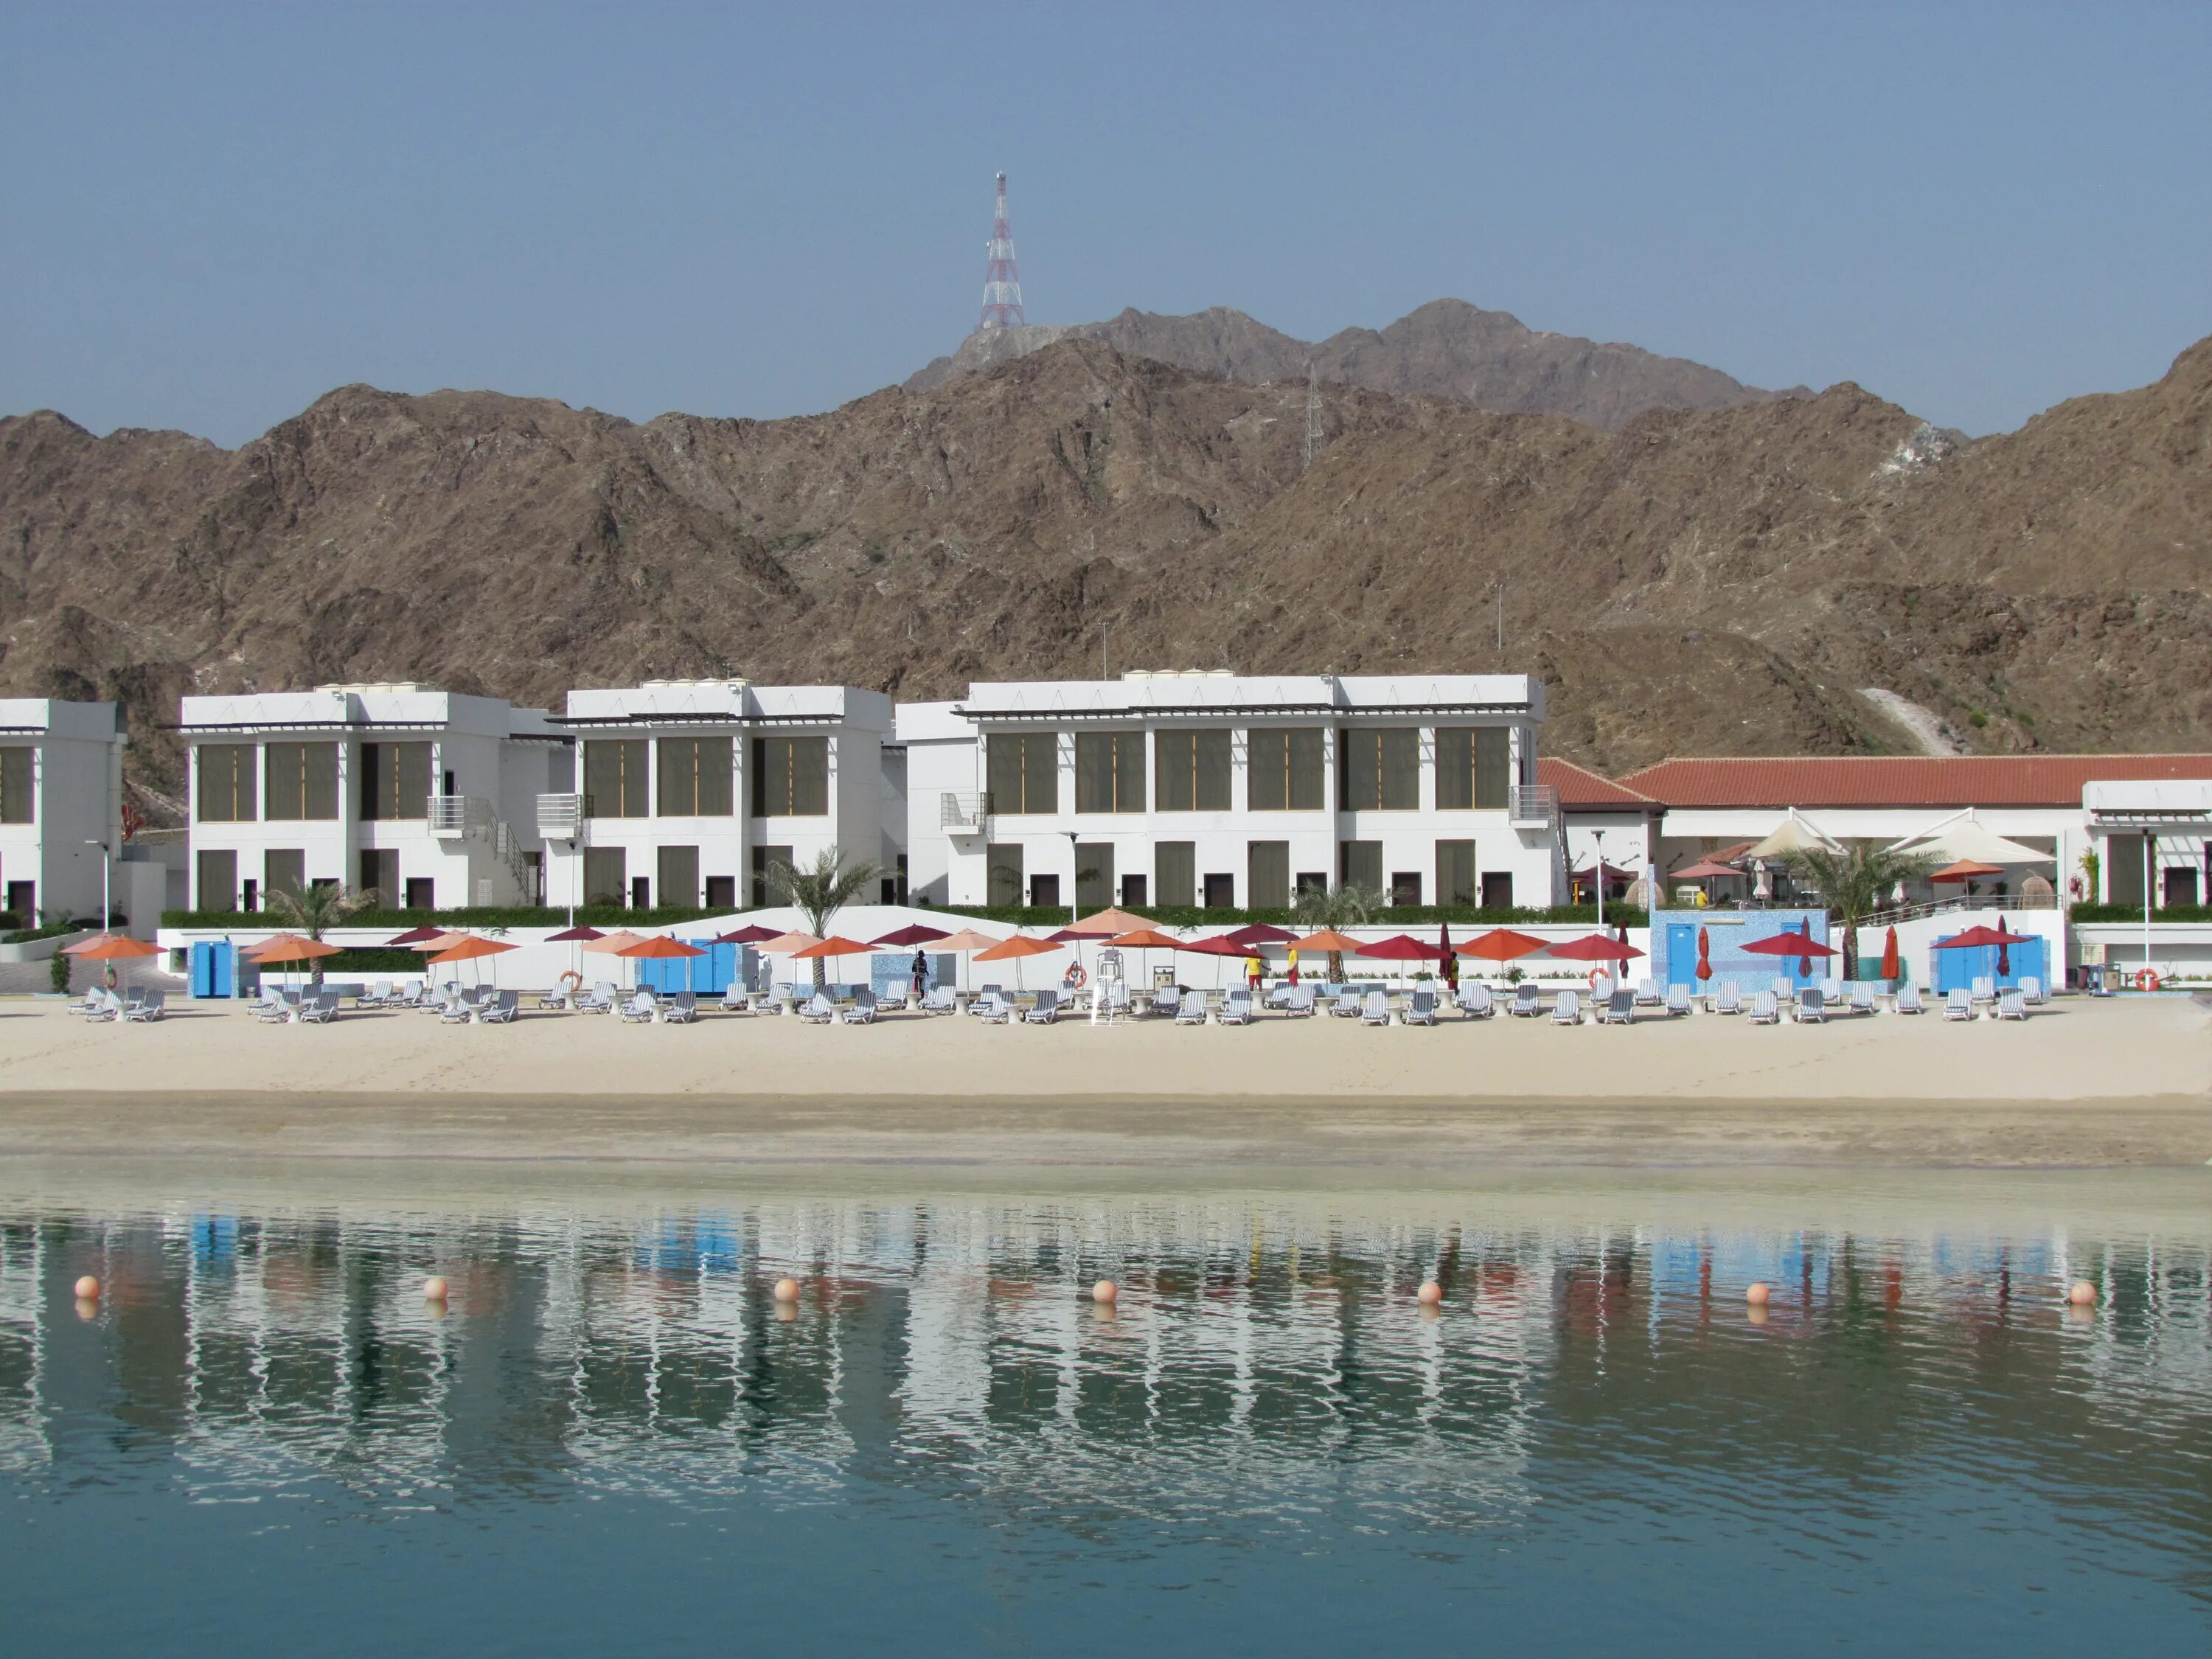 Отель Mirage Bab al Bahr Beach Resort 4. Mirage Bab al Bahr Beach Resort 4 Фуджейра. Mirage Bab al Bahr Beach Hotel 5 Фуджейра.